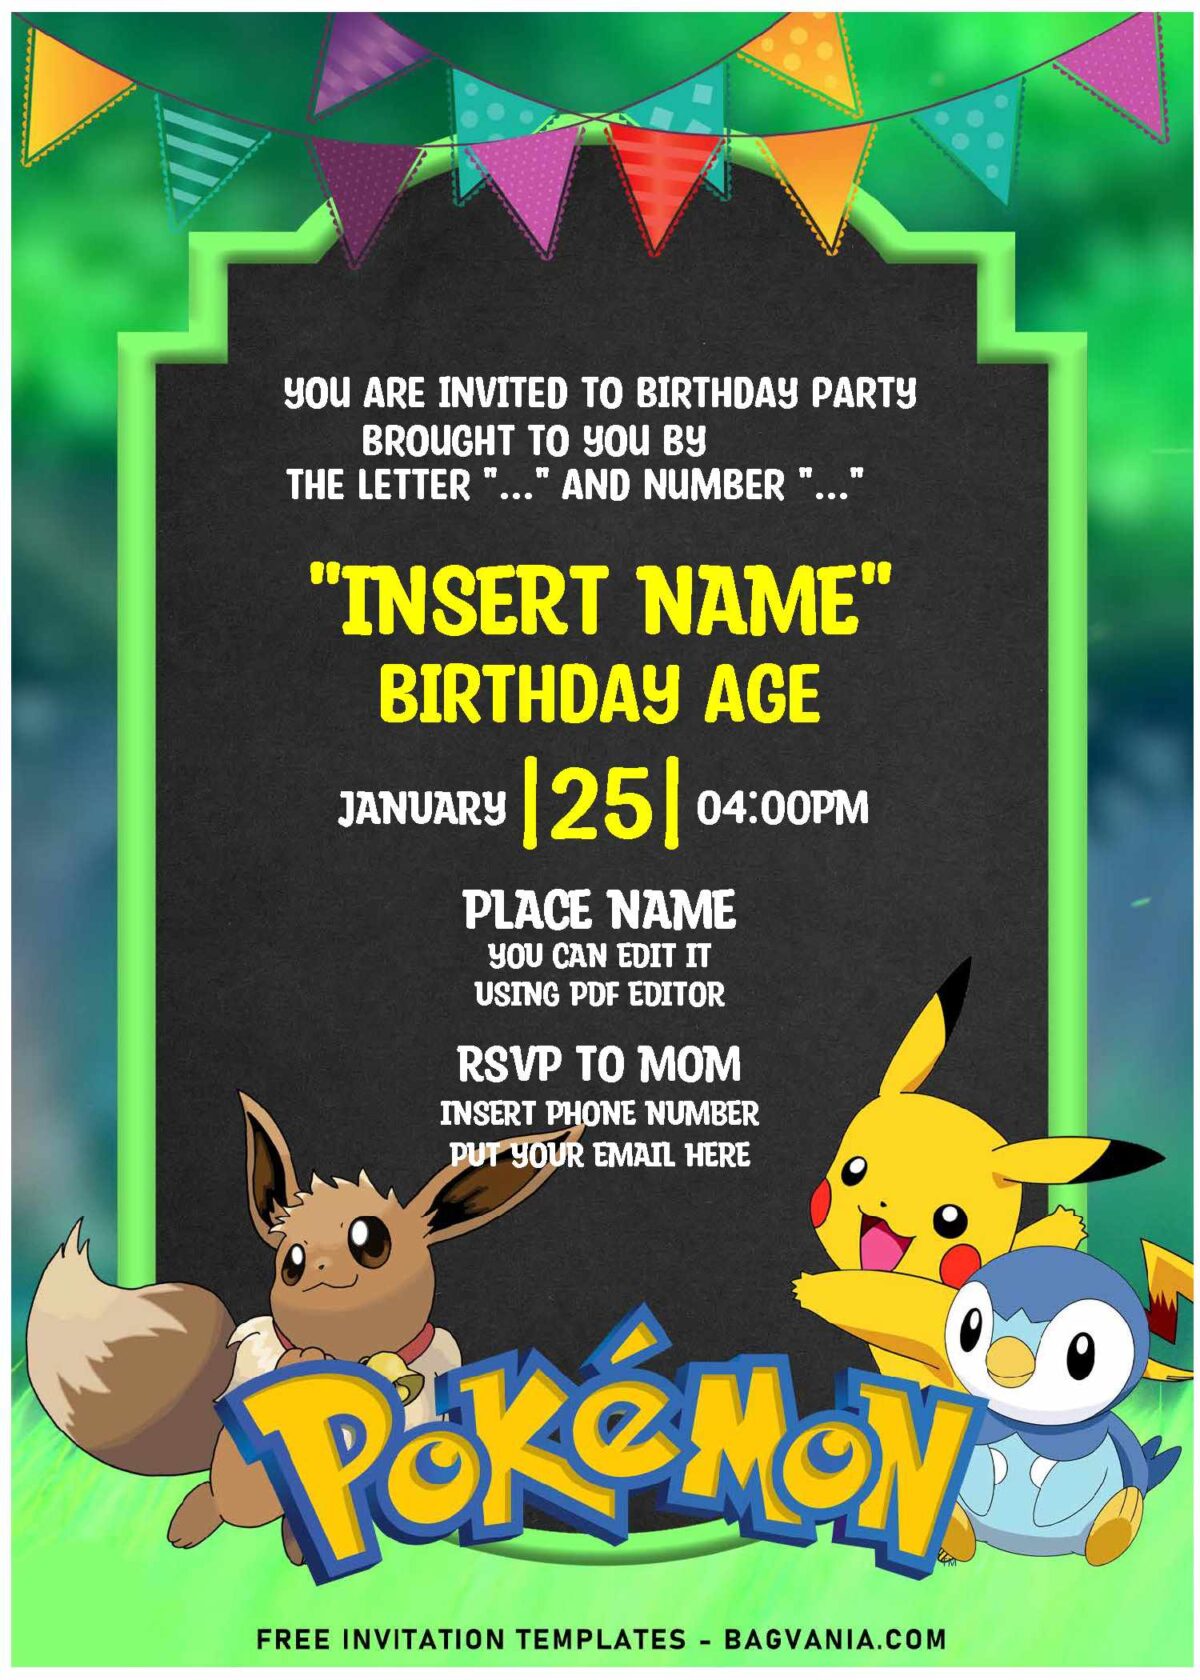 (Free Editable PDF) Hilarious Pikachu And Friends Pokémon Birthday Invitation Templates with cute Eevee and Pikachu